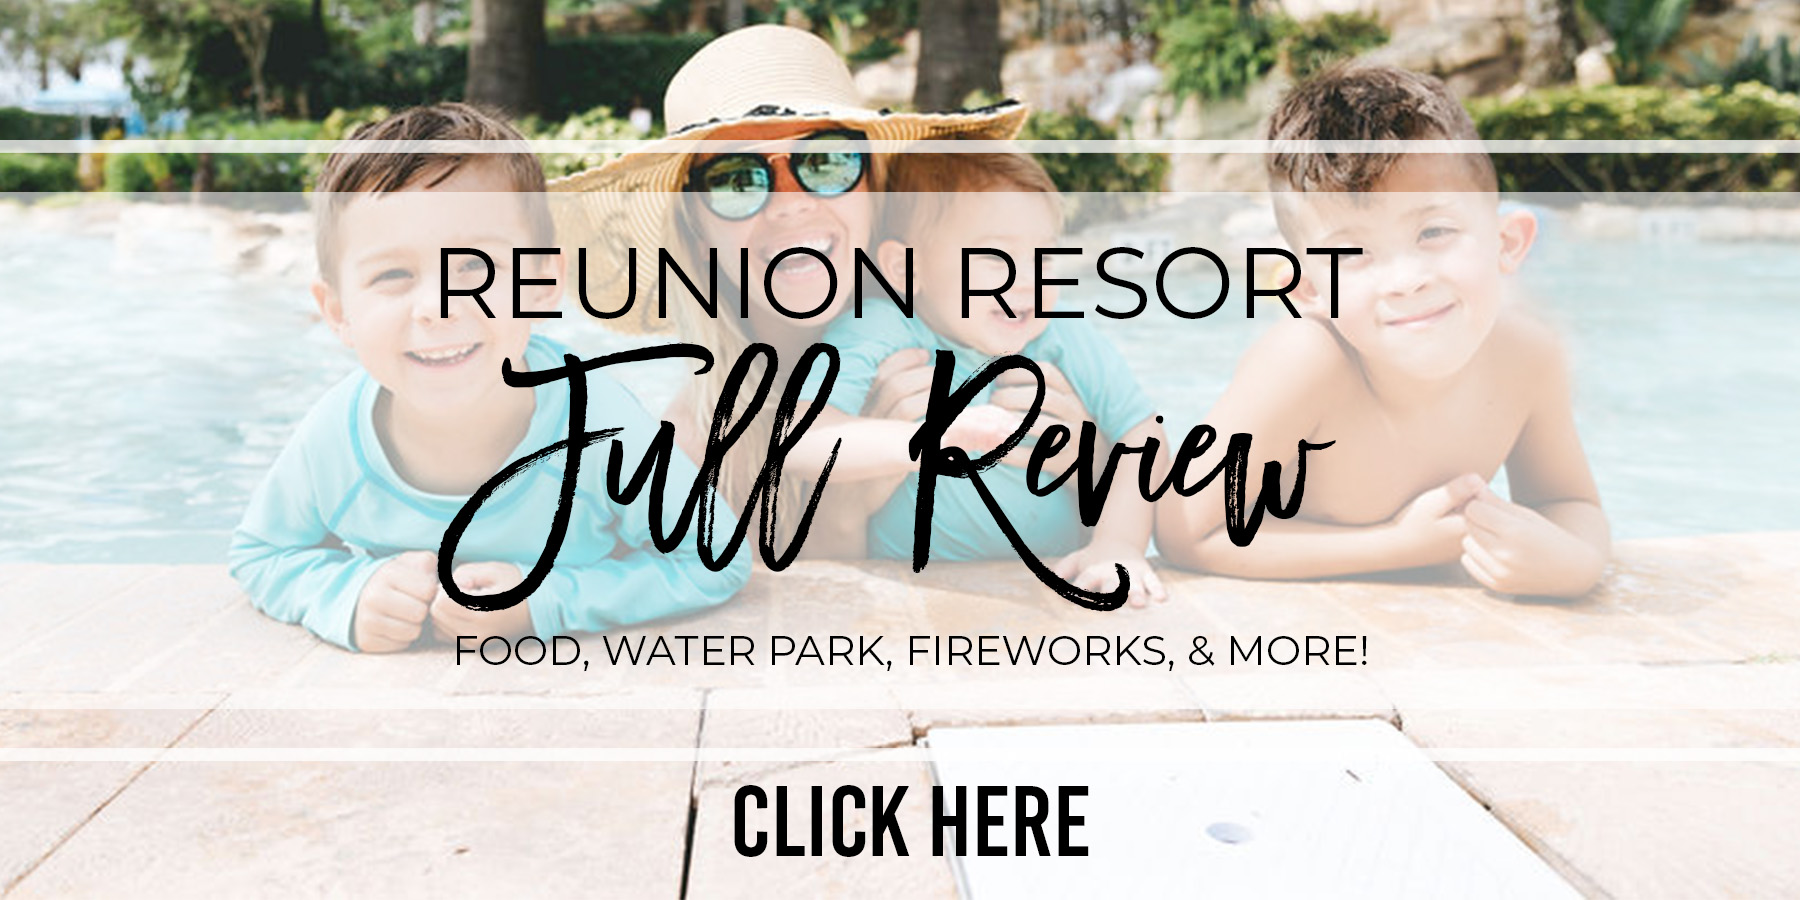 REUNION RESORT Family Vacation Orlando Water Park Resort in Kissimmee Best Family Resort Orlando